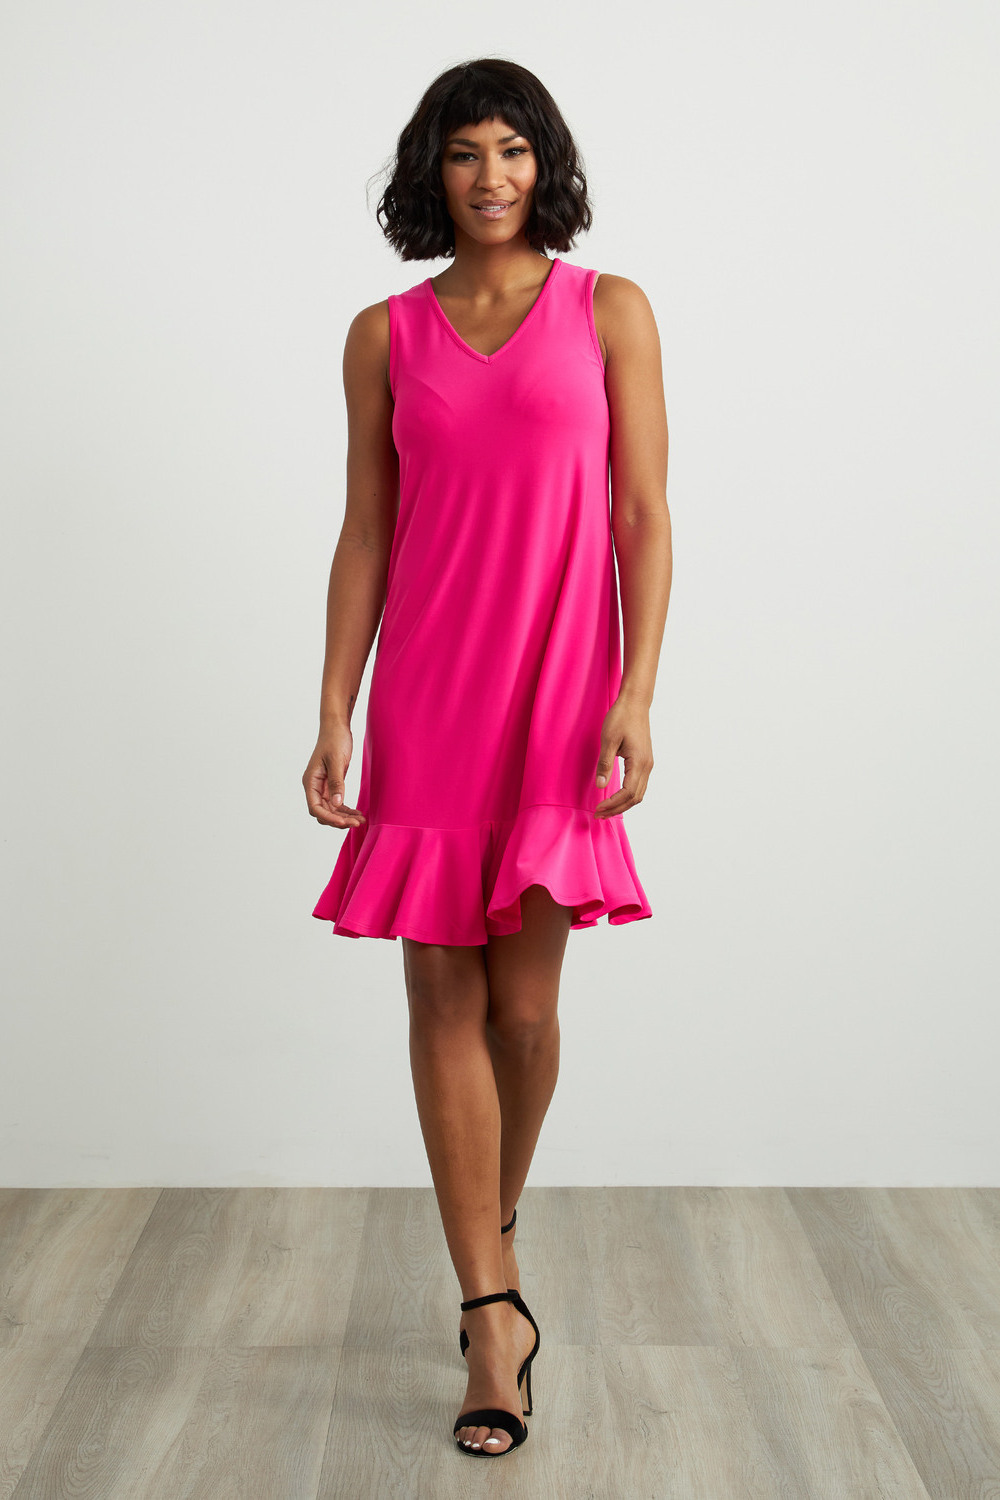 Joseph Ribkoff Sleeveless Mini Dress Style 212204. Azalea